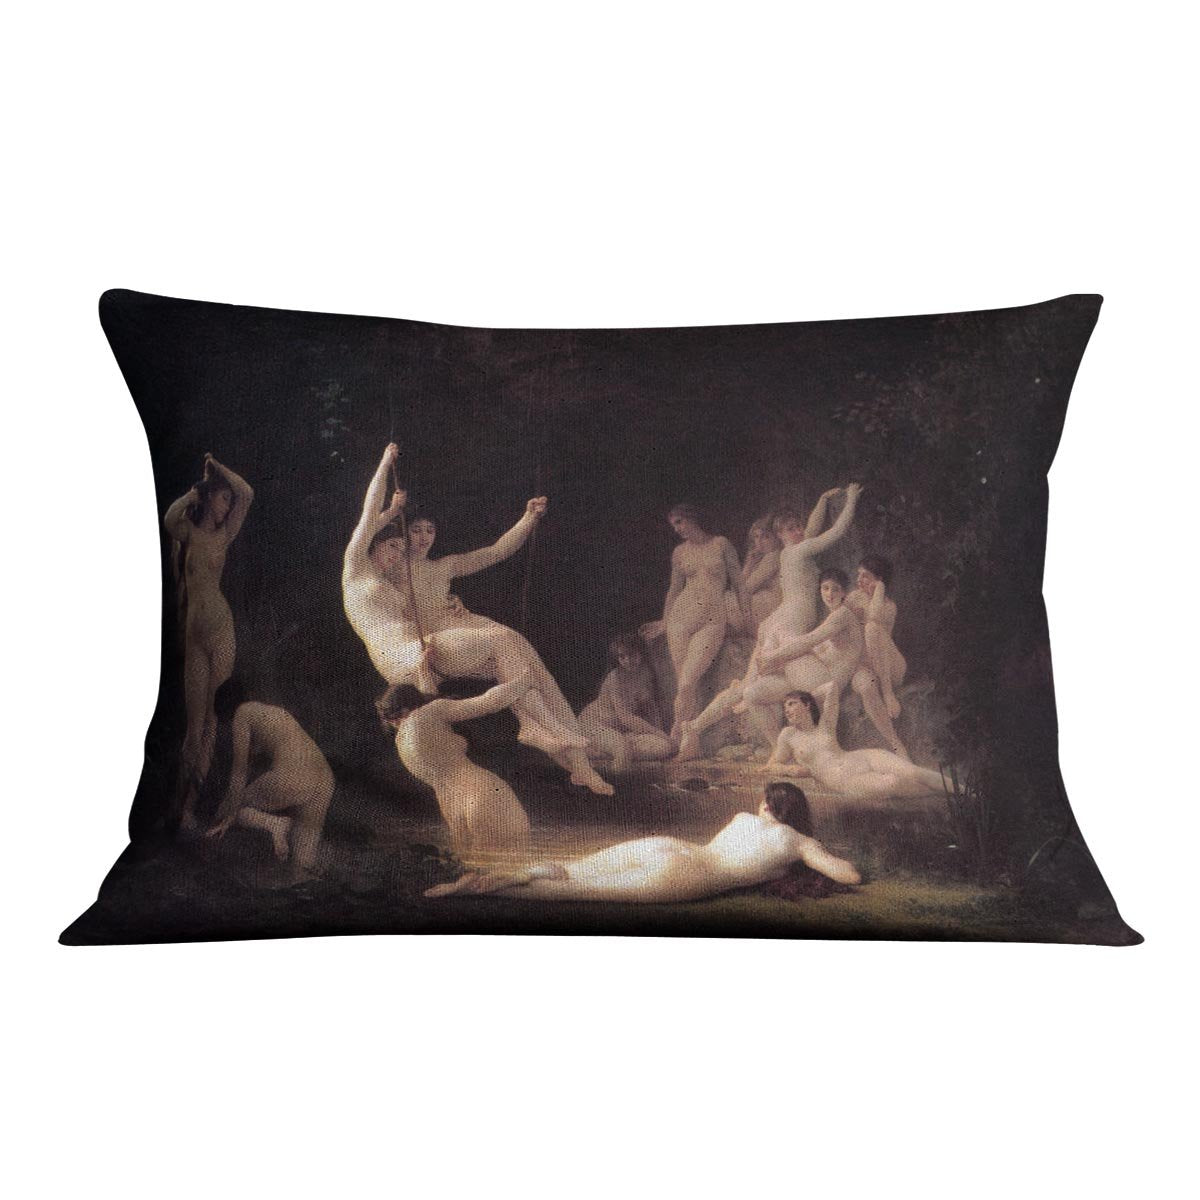 The Nymphaeum By Bouguereau Throw Pillow